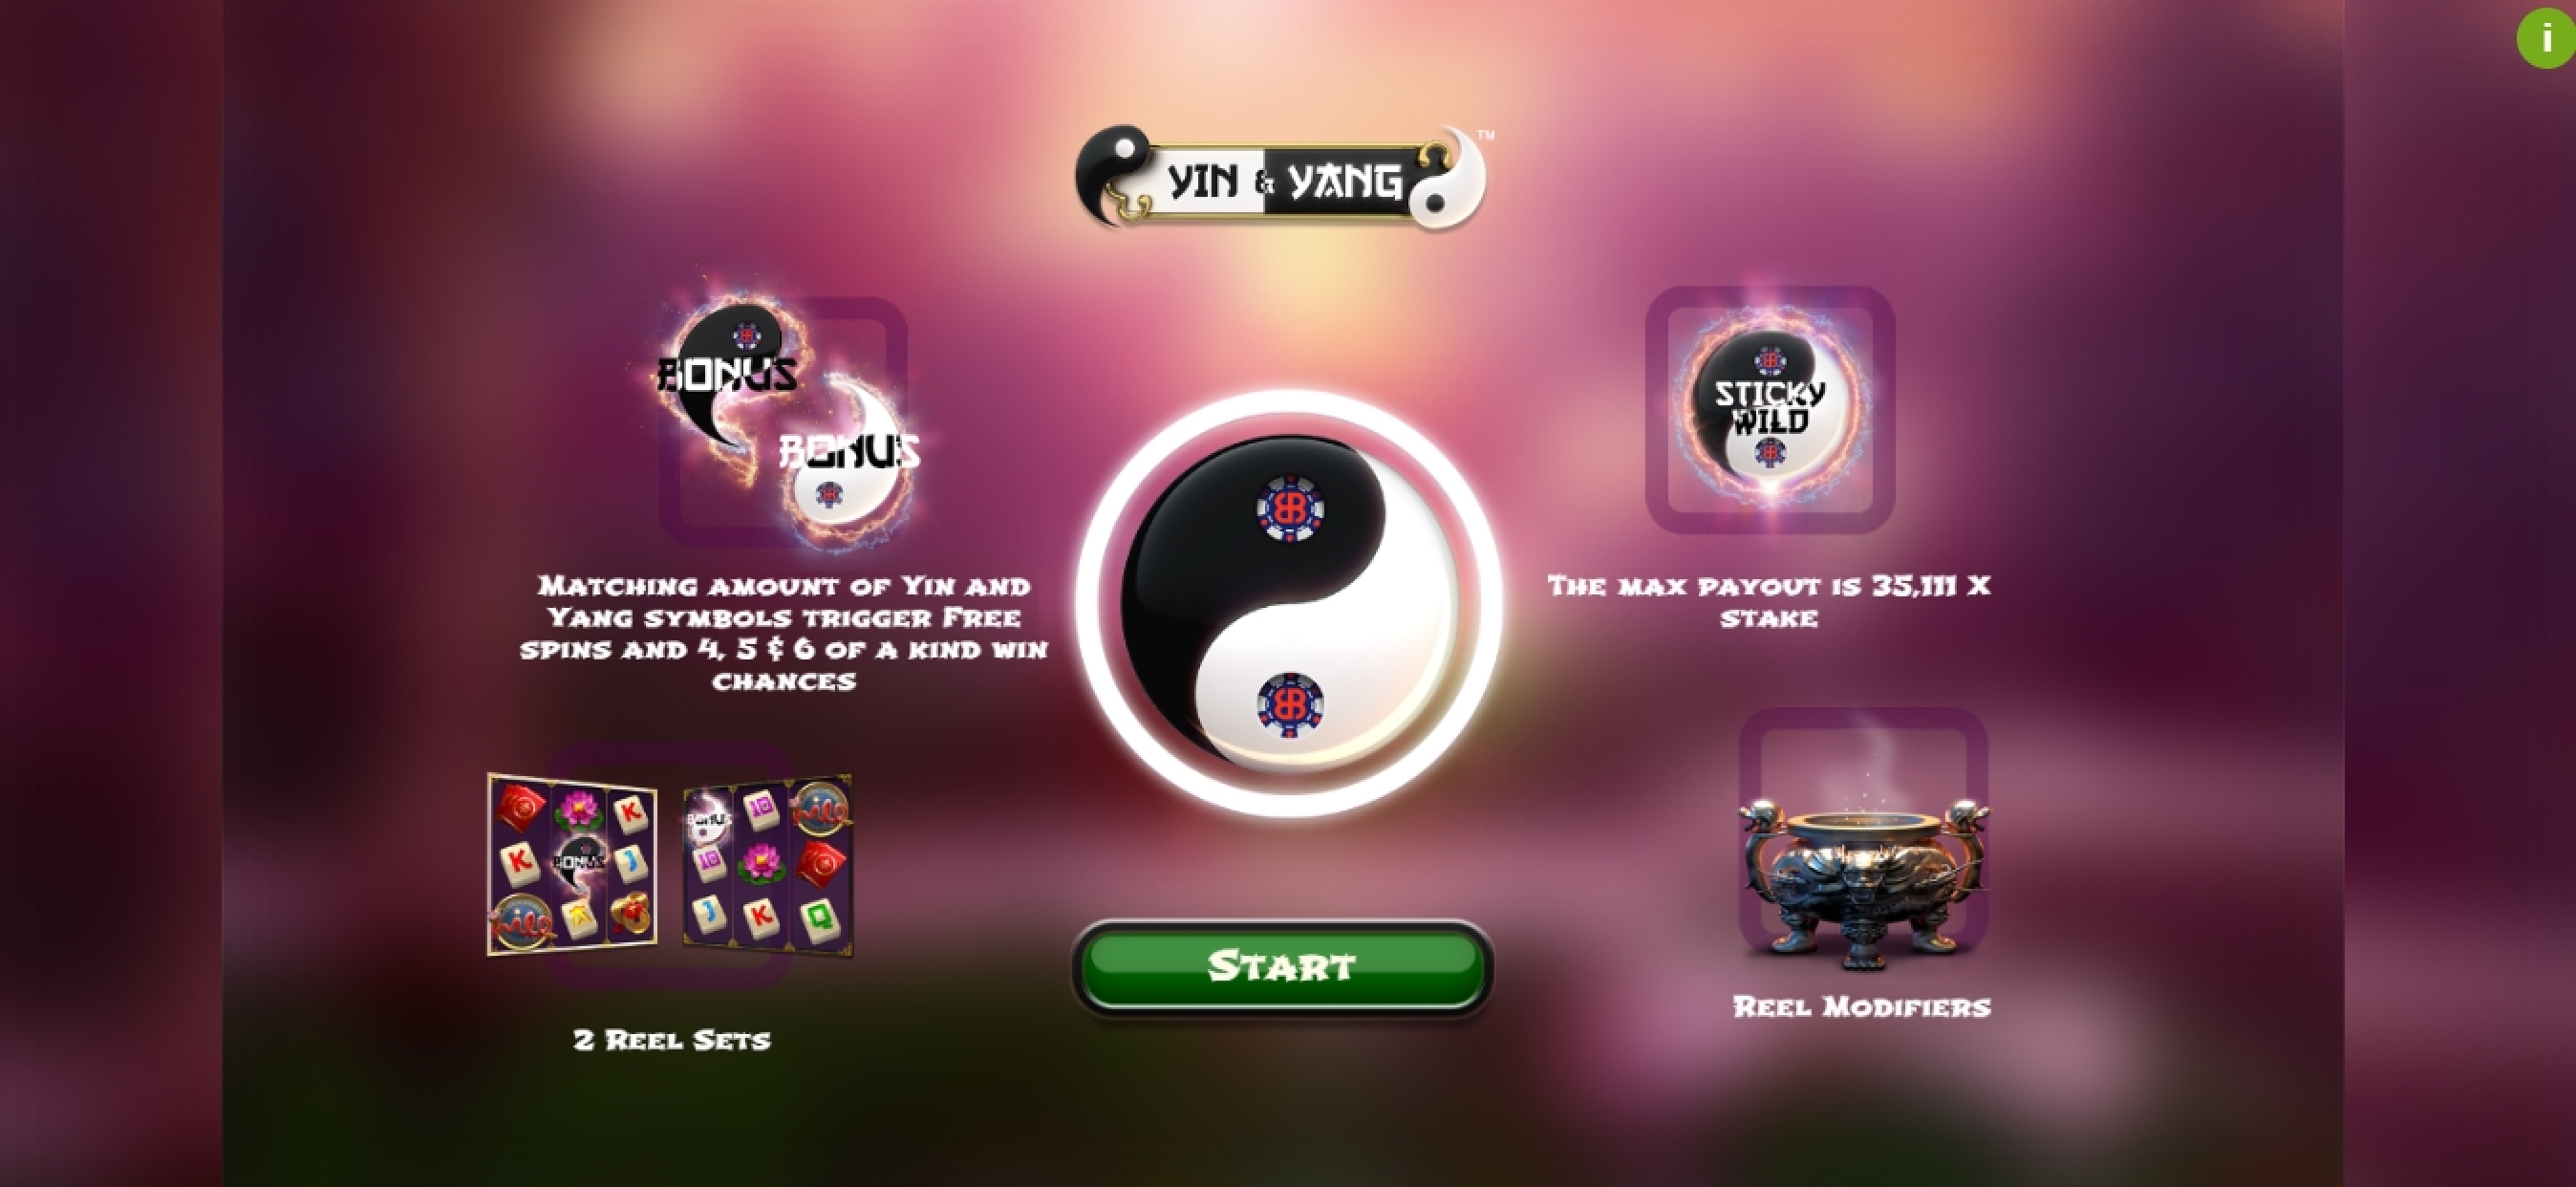 Play Yin & Yang Free Casino Slot Game by BB Games